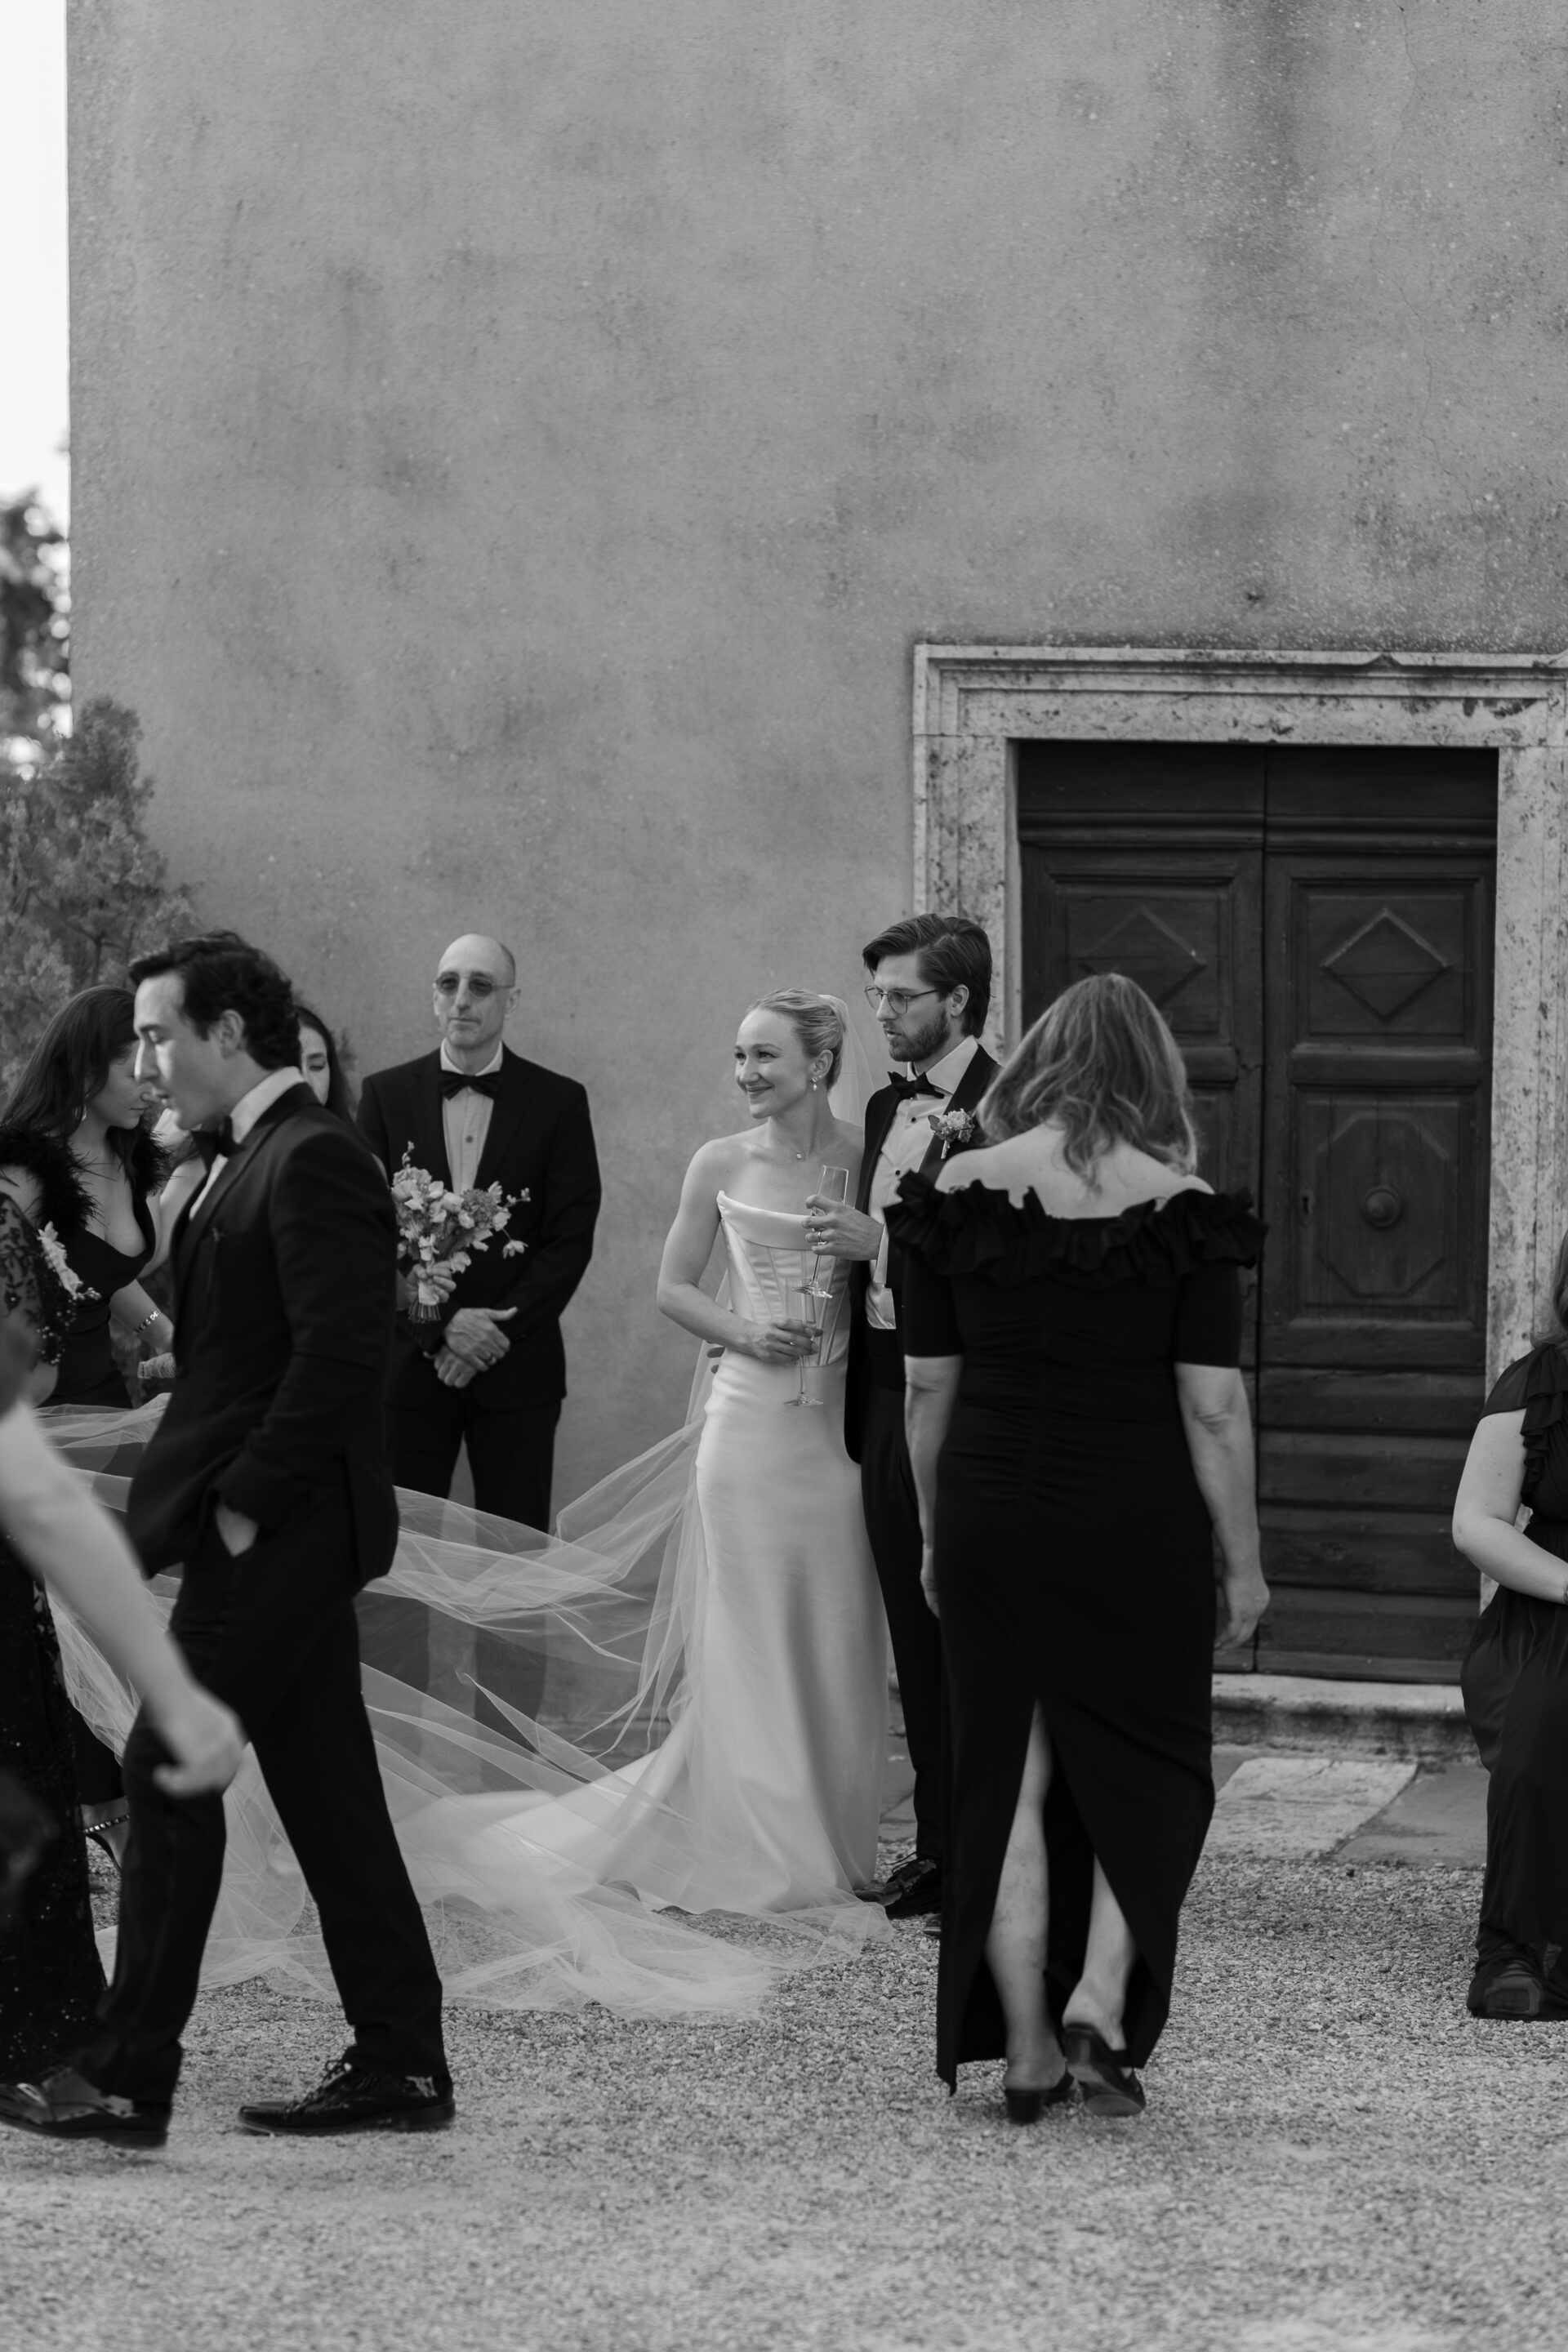 Candid portraits captured at Italian wedding